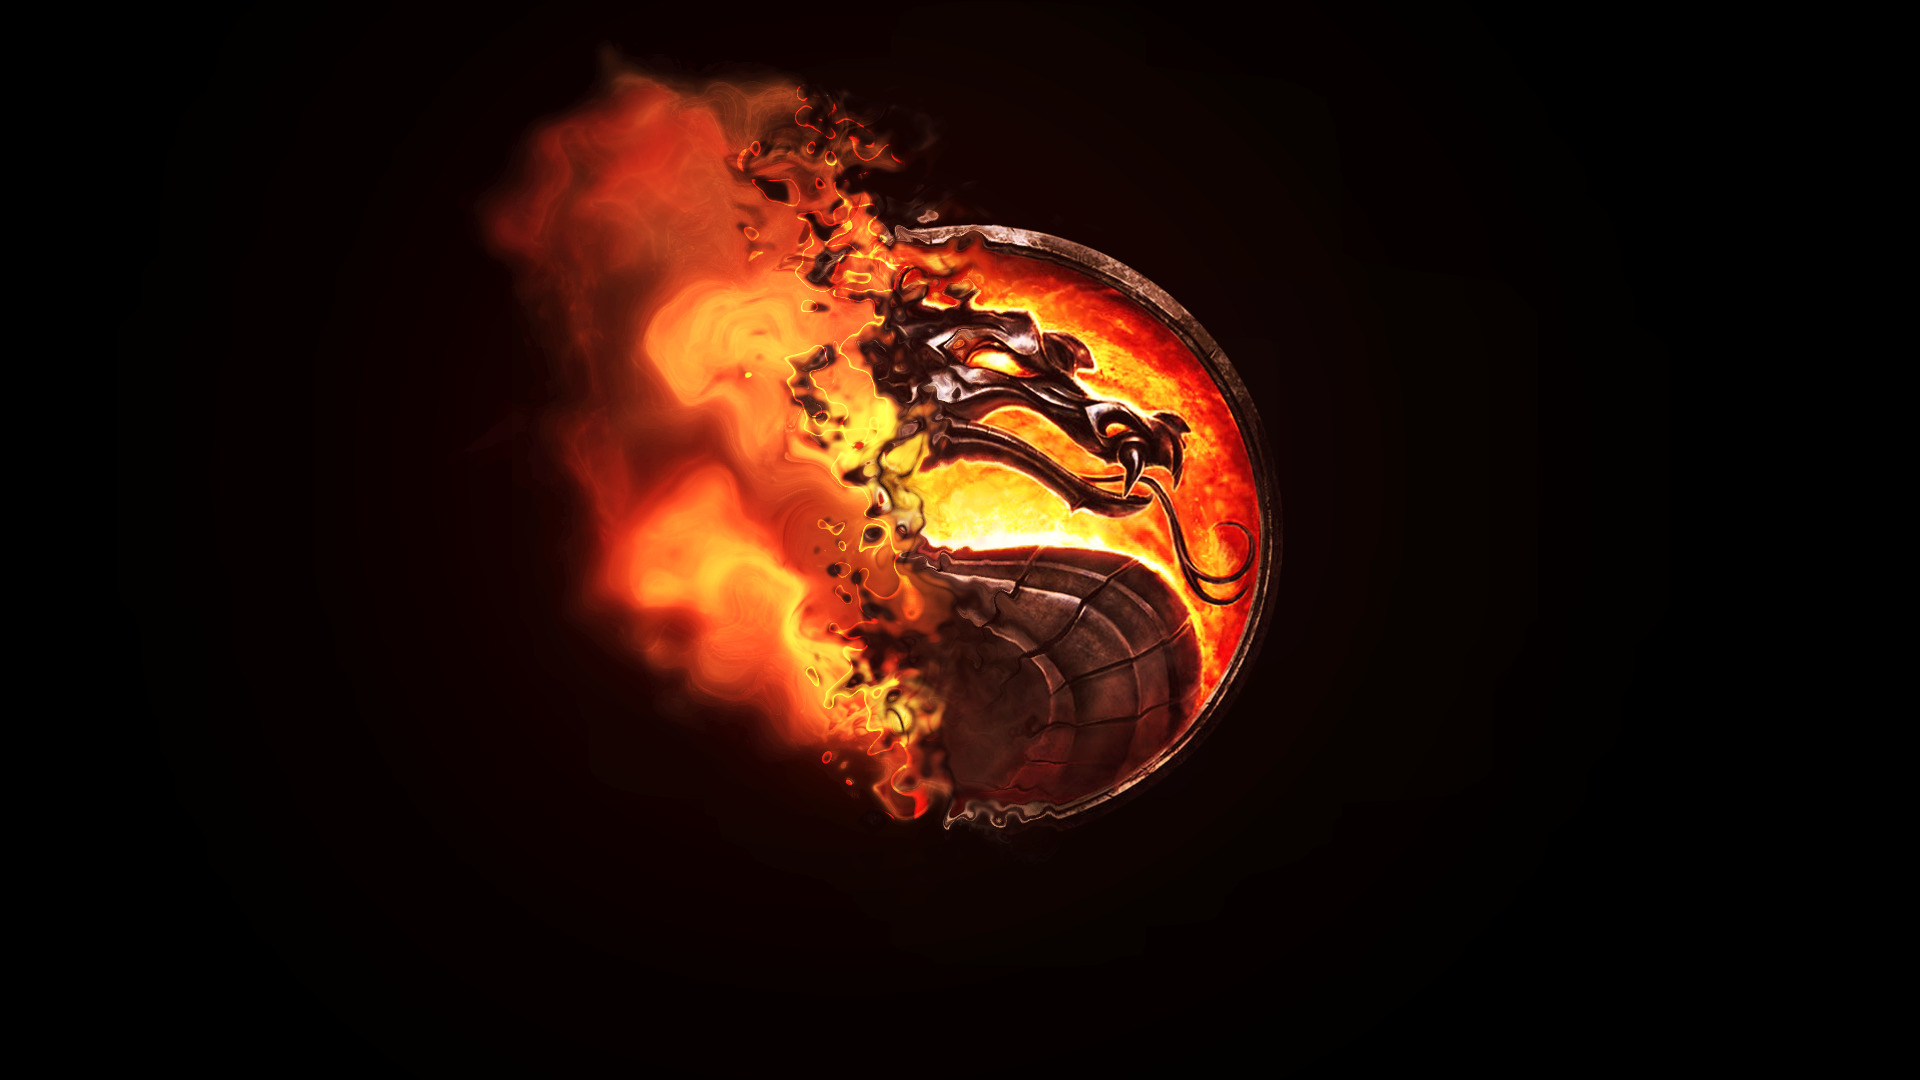 dragon burn for mac